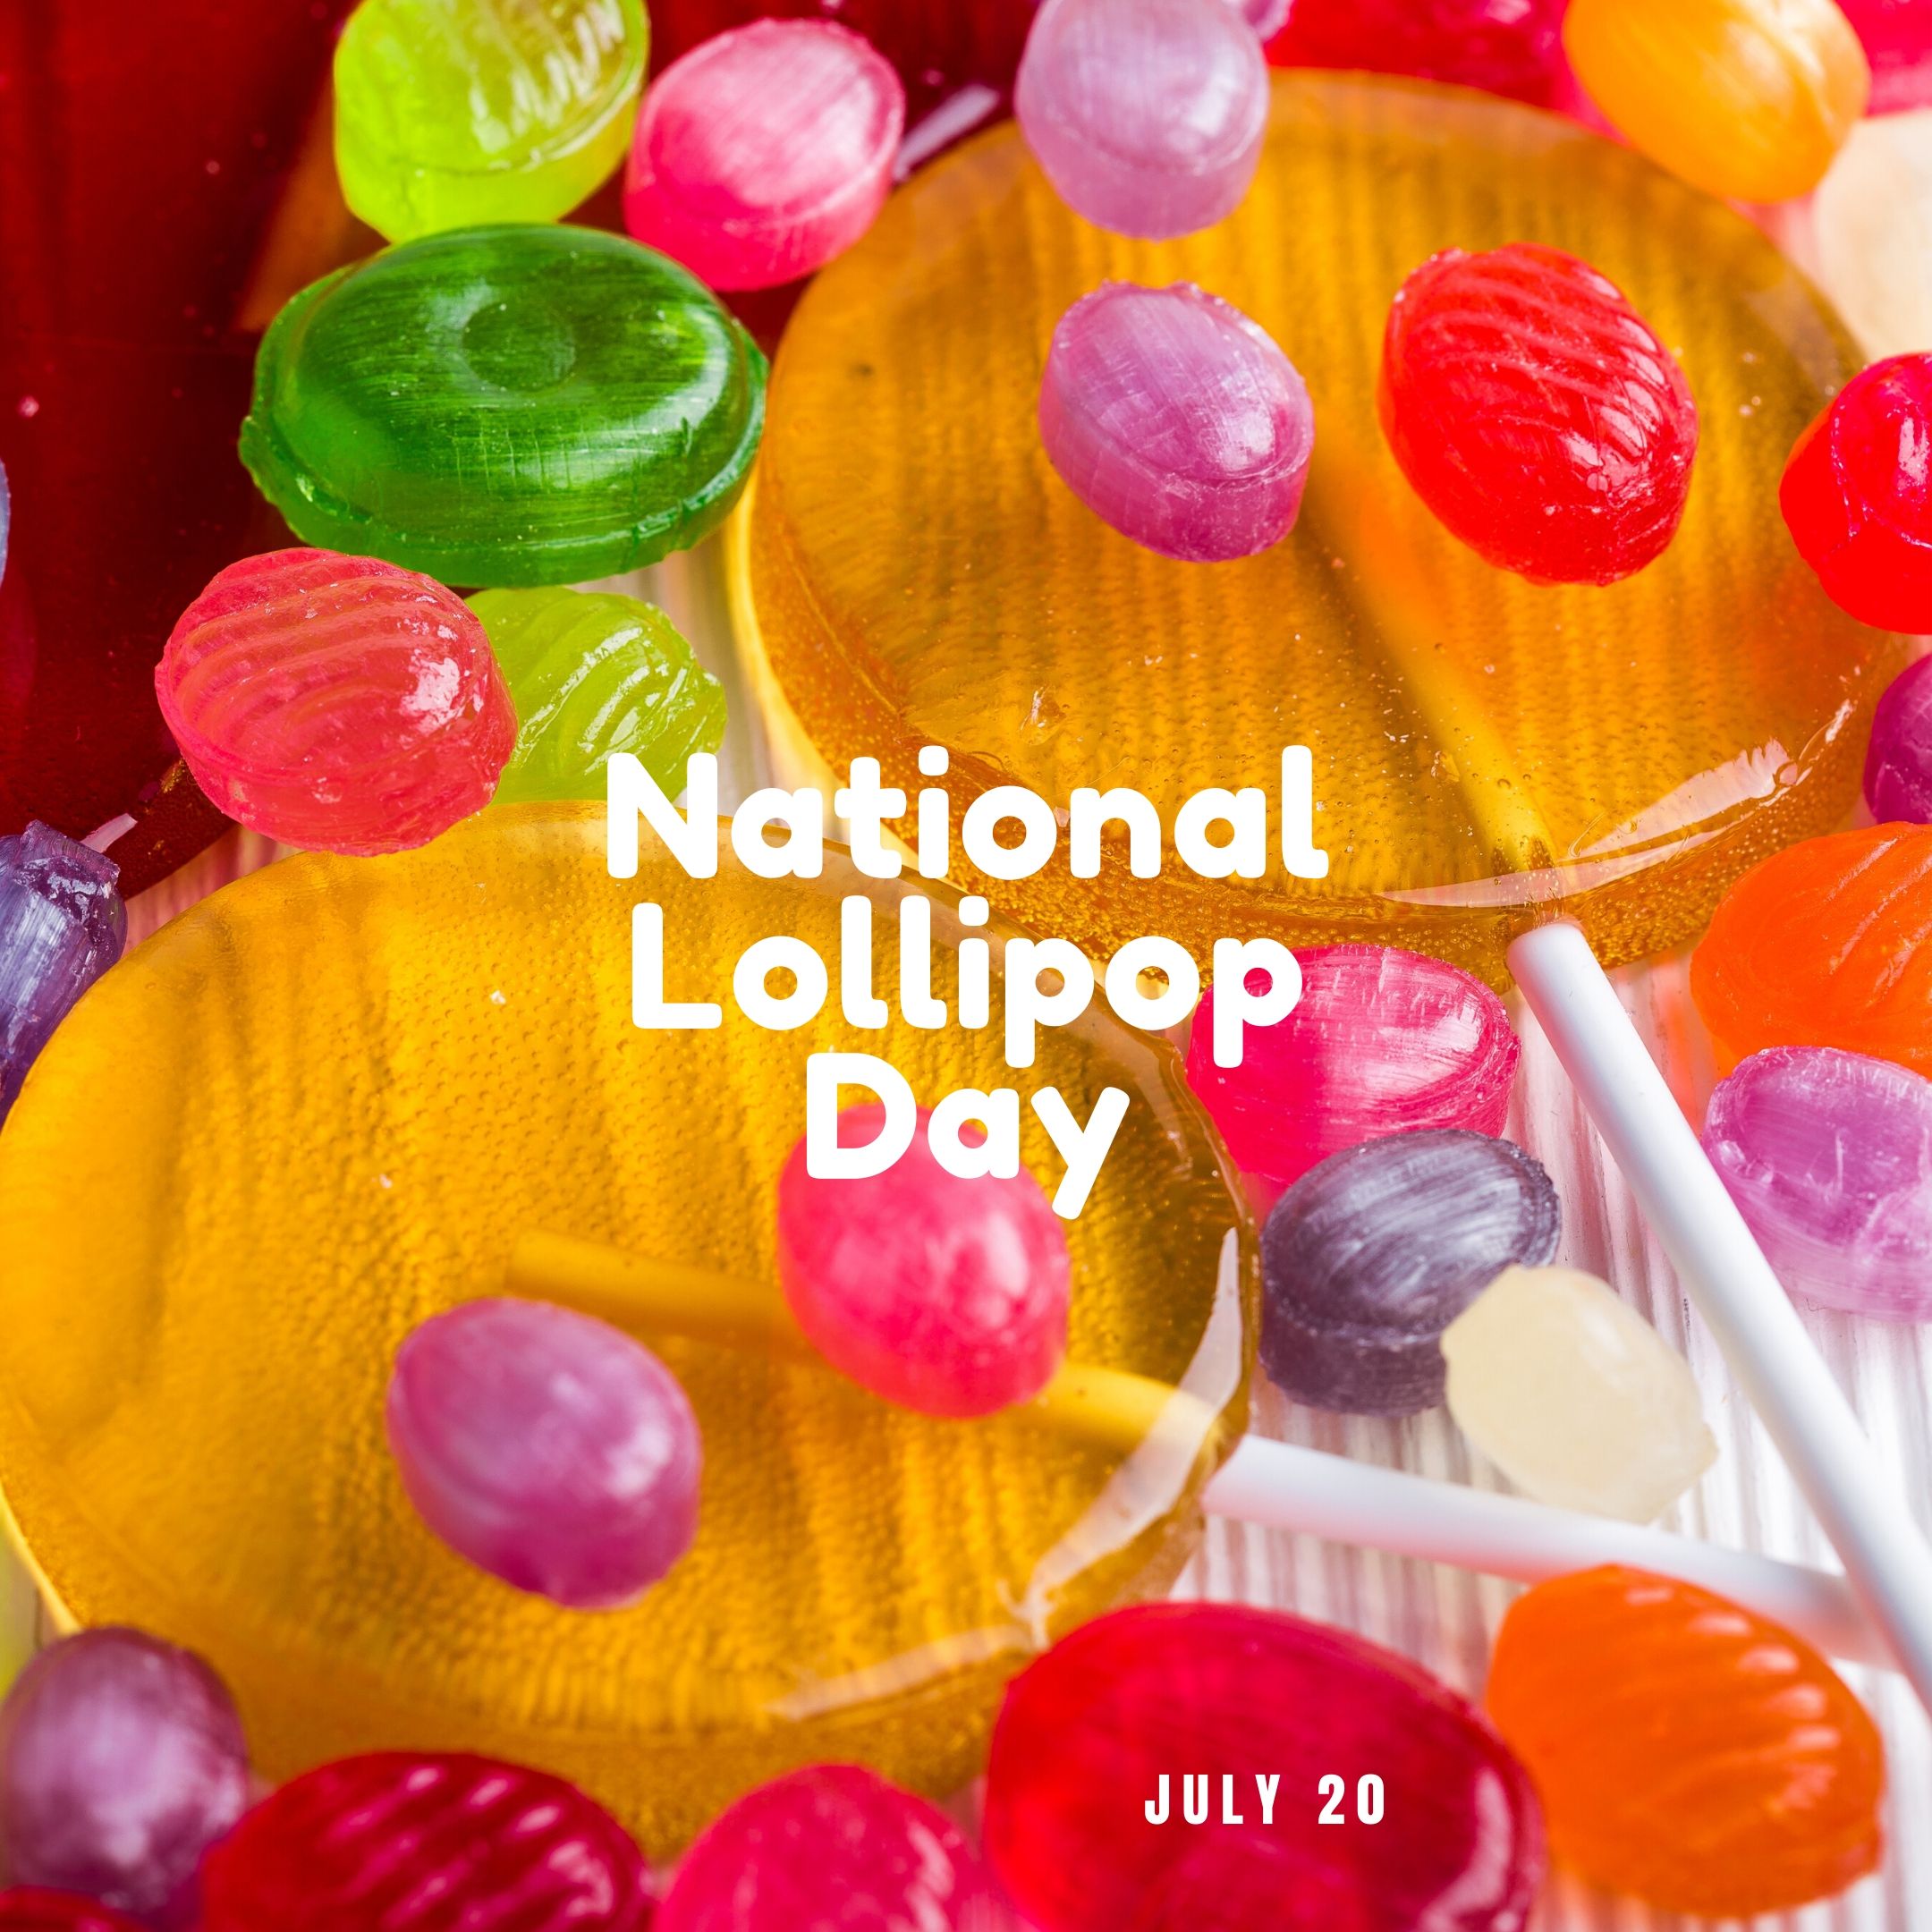 NATIONAL LOLLIPOP DAY - July 20 - National Day Calendar